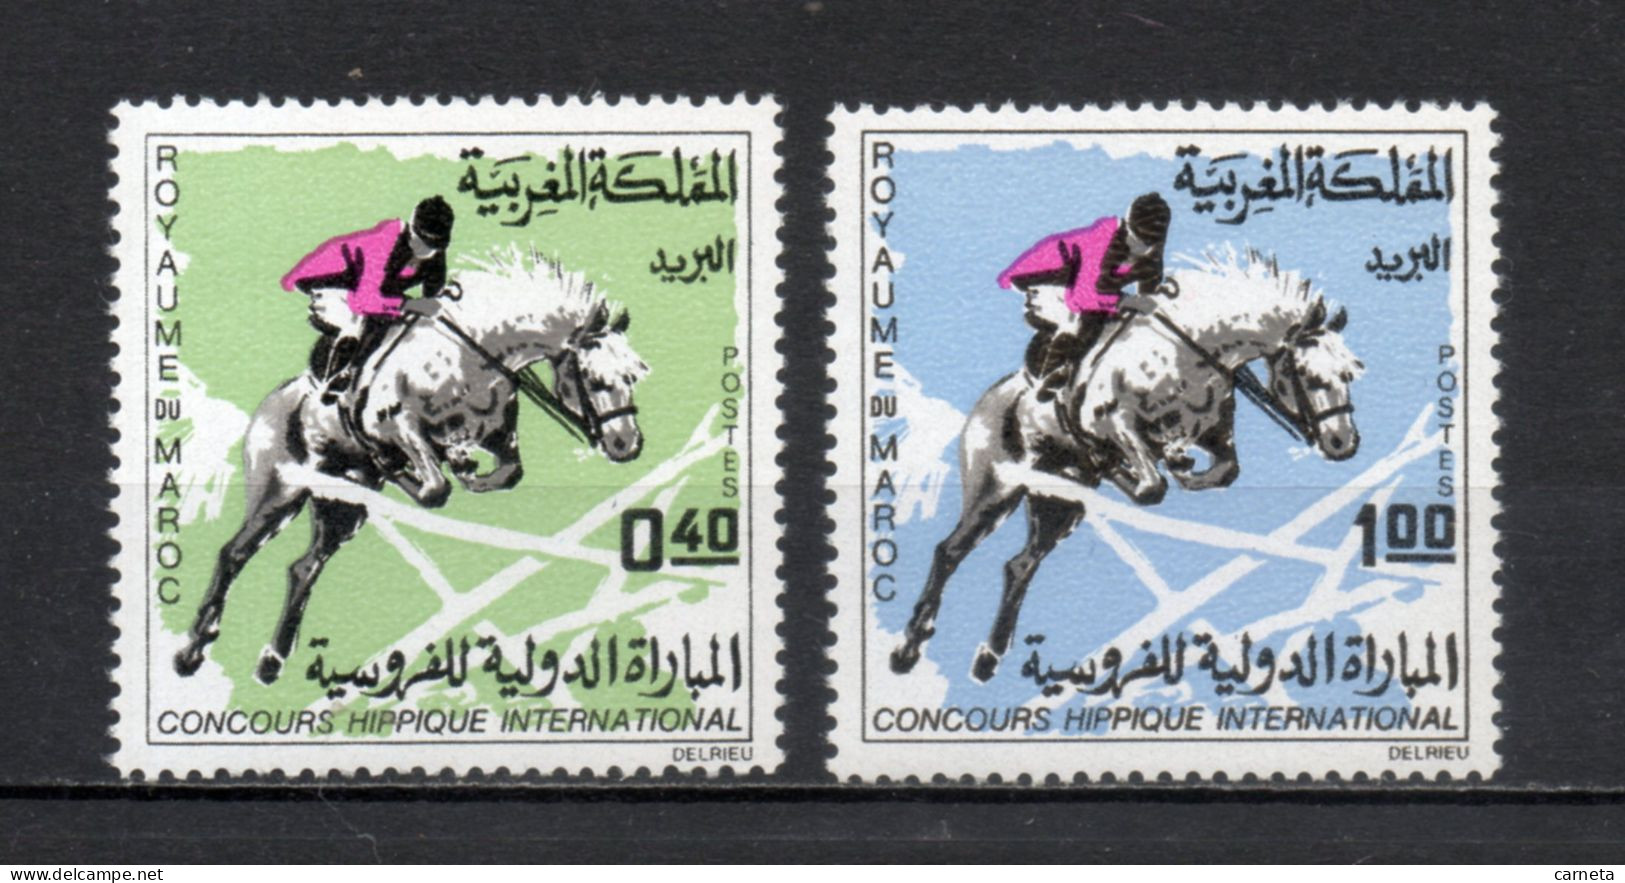 MAROC N°  529 + 530     NEUFS SANS CHARNIERE  COTE 2.00€     CHEVAL ANIMAUX SPORT - Marokko (1956-...)